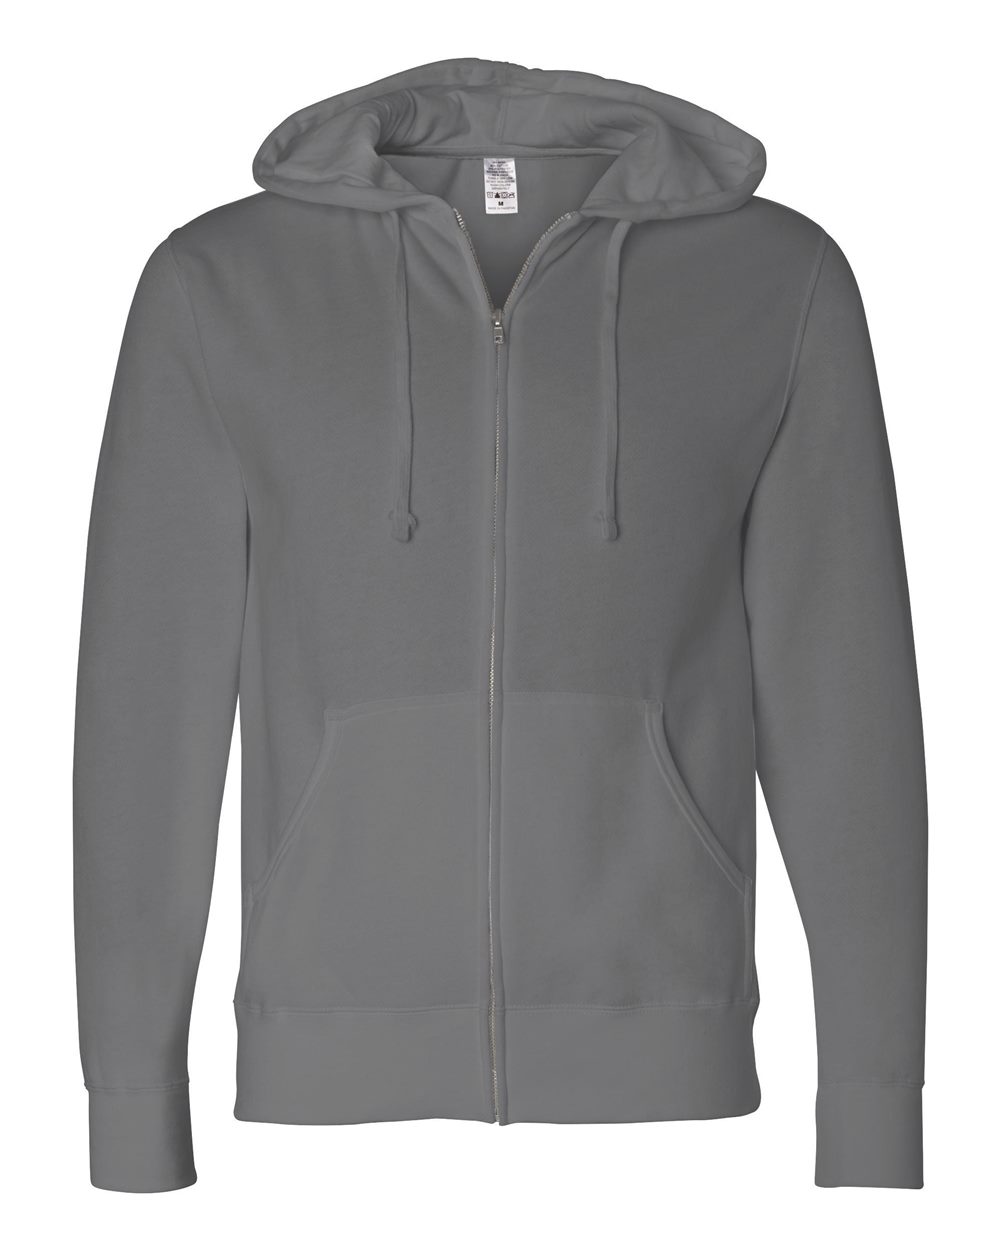 Full-Zip Hooded Sweatshirt-Independent Trading Co.